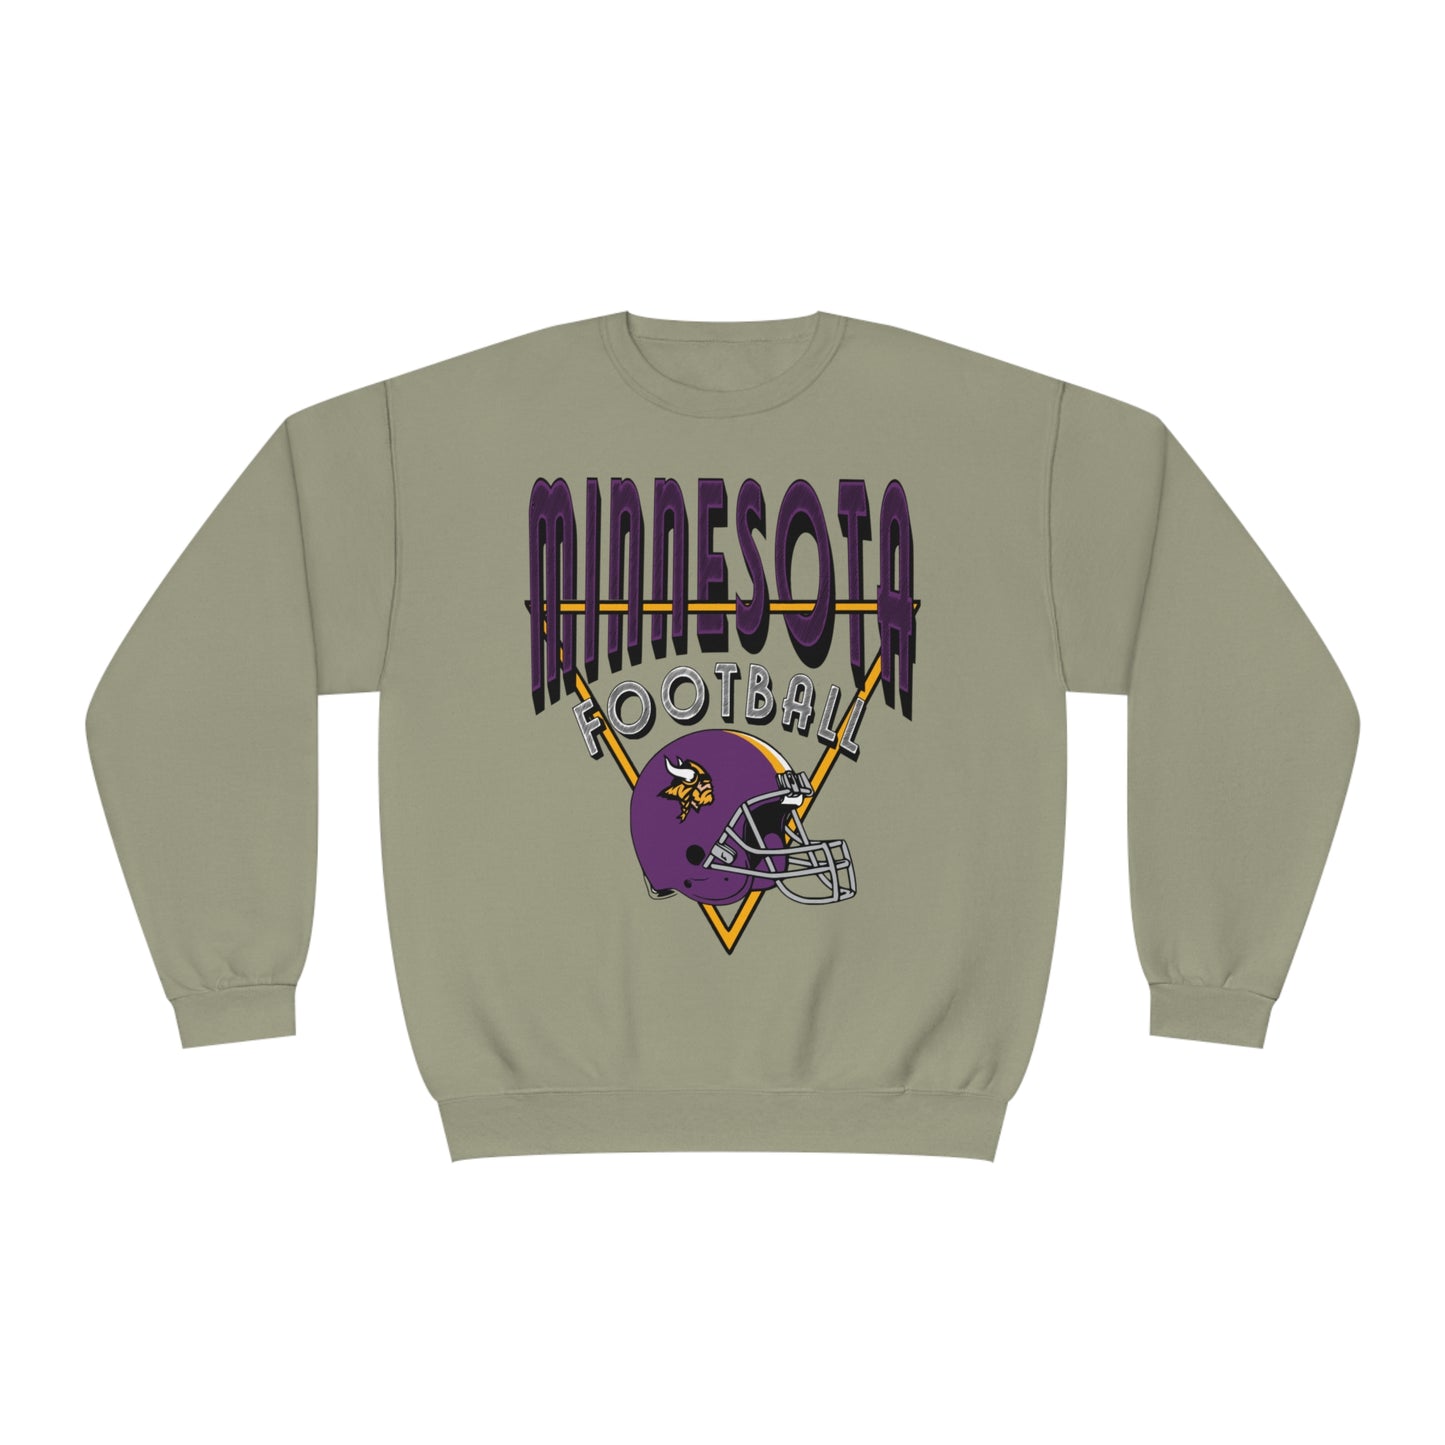 Vintage Minnesota Vikings Crewneck - Retro Unisex Football Sweatshirt - Men's & Women's 90's Oversized Hoodie